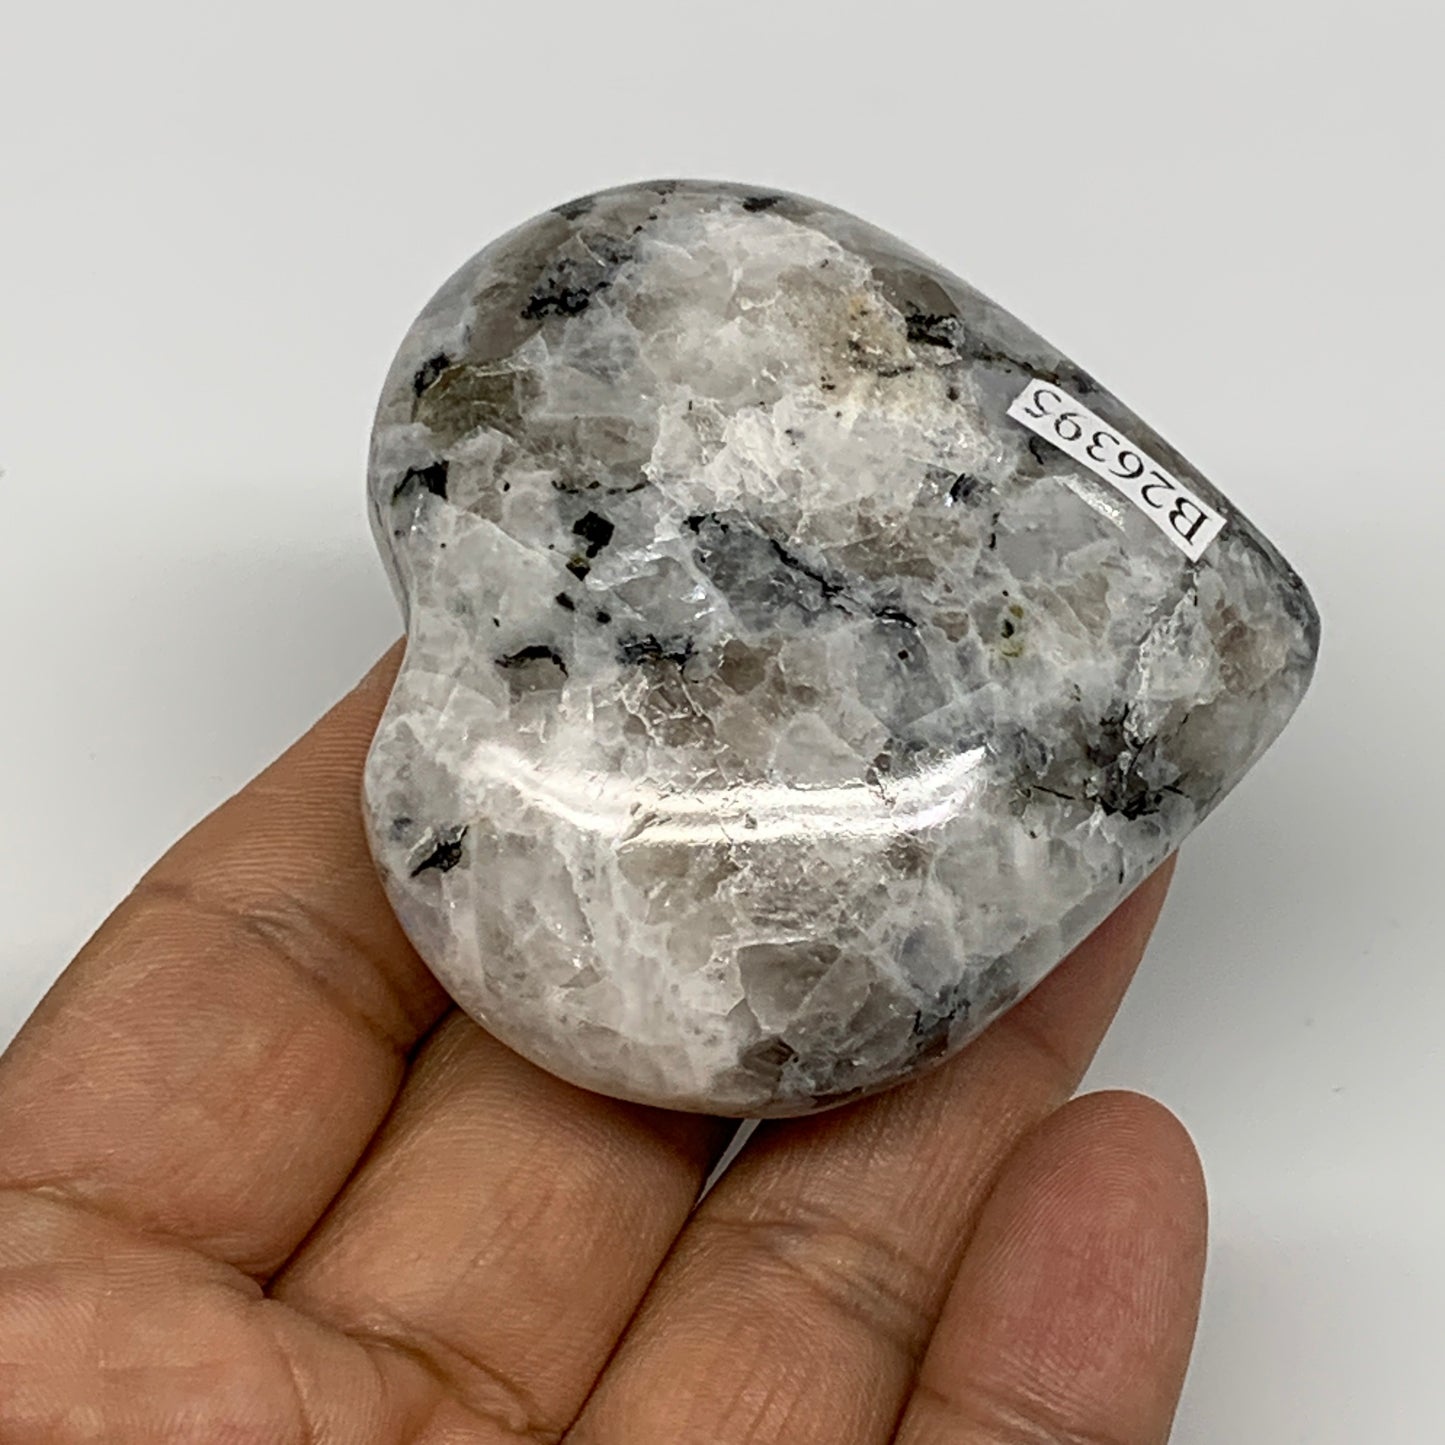 110.3g, 2.3"x2.3"x0.9", Rainbow Moonstone Heart Crystal Gemstone @India, B26395